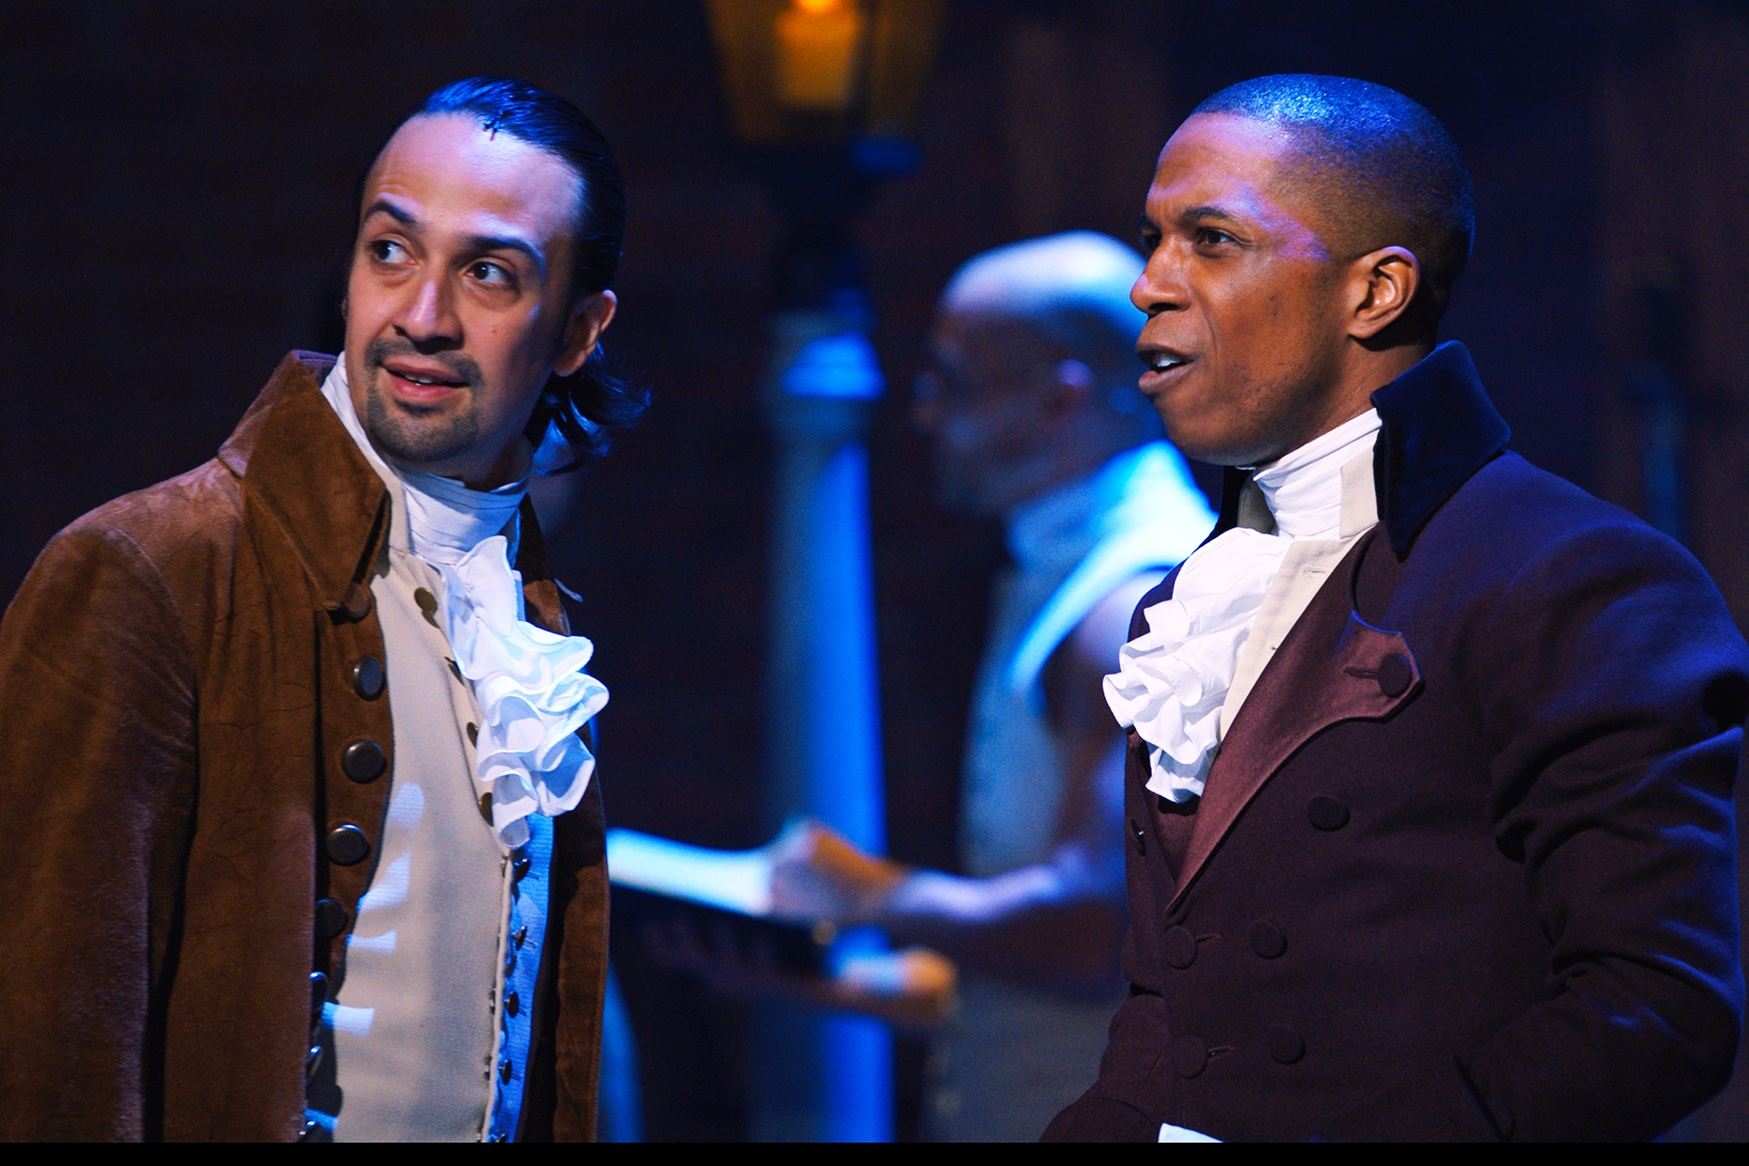 Lin-Manuel Miranda as Alexander Hamilton, and Leslie Odom, Jr. as Aaron Burr, part of the original cast of “Hamilton: An American Musical.” Image courtesy of Disney